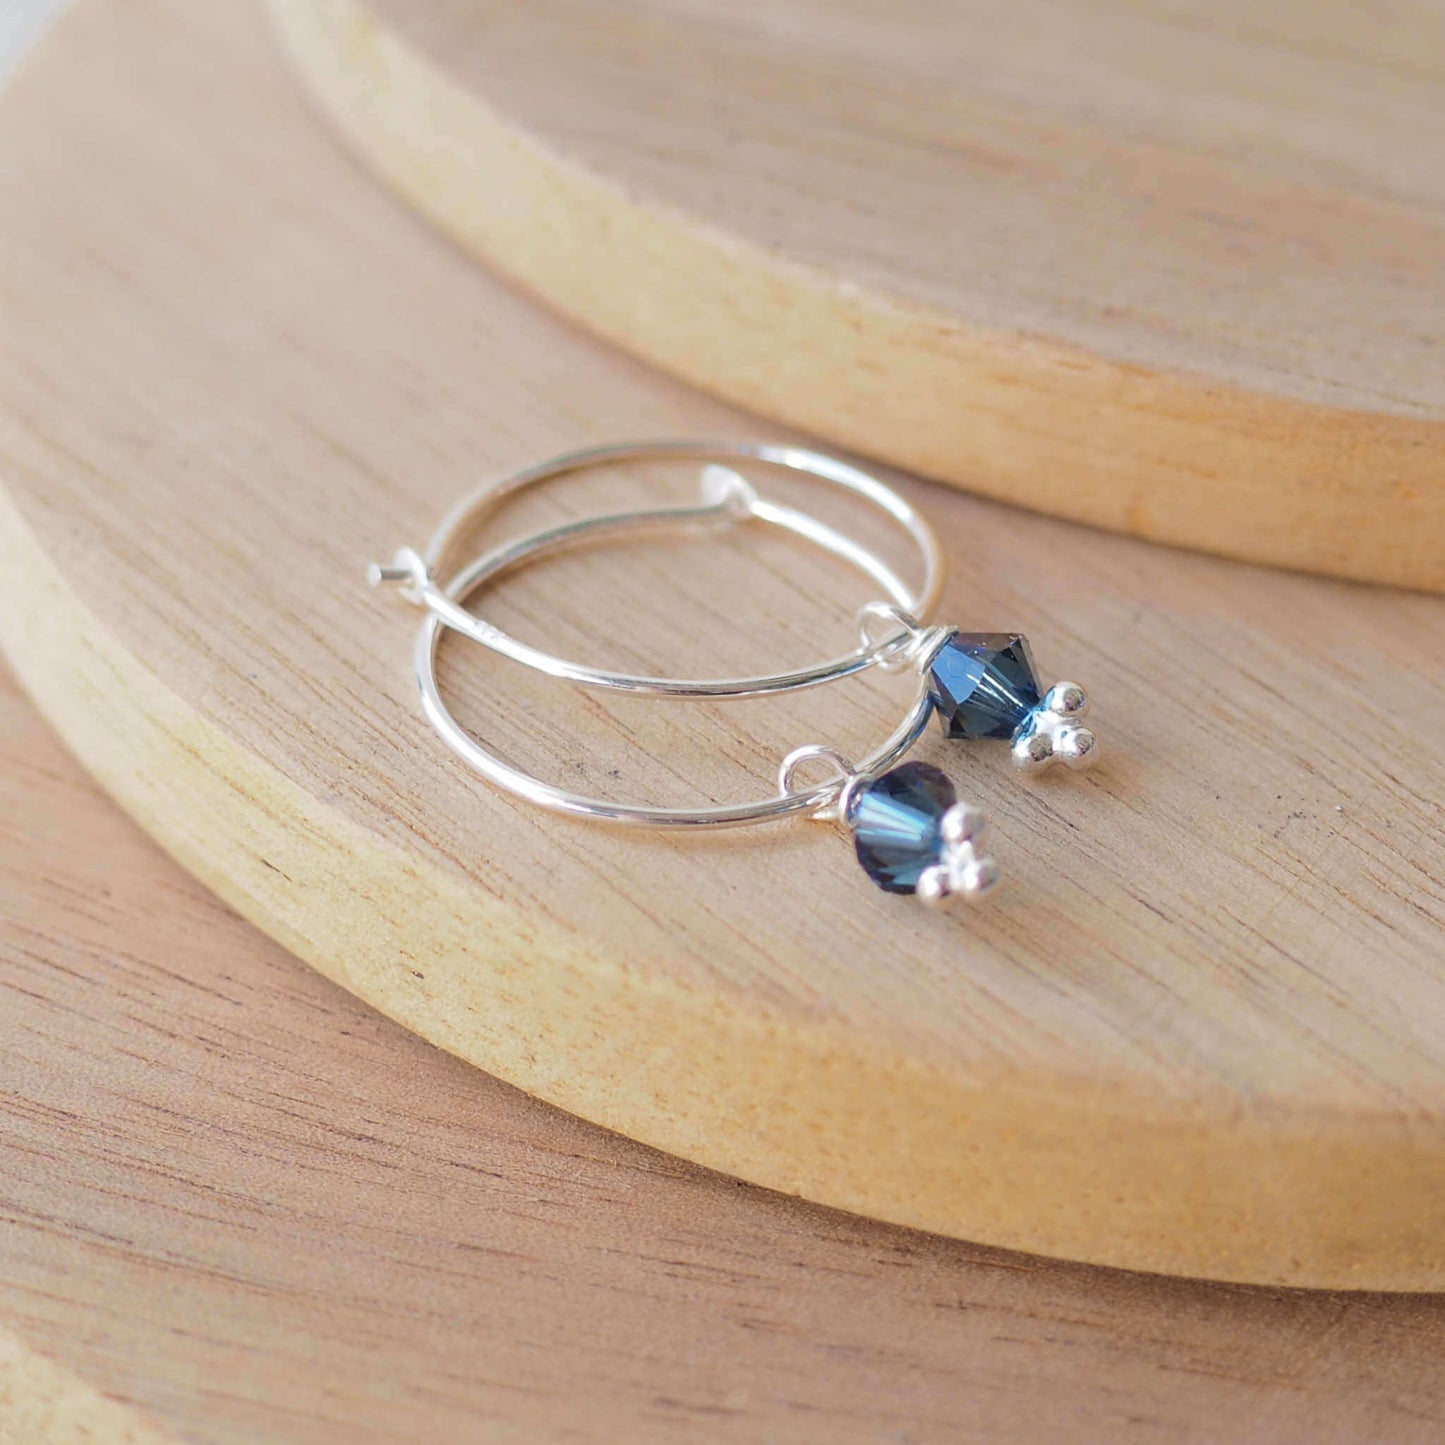 Teal Crystal simple wire hoop earrings with a crystal dropper in a petrol blue. Handmade in Scotland UK by maram jewellery